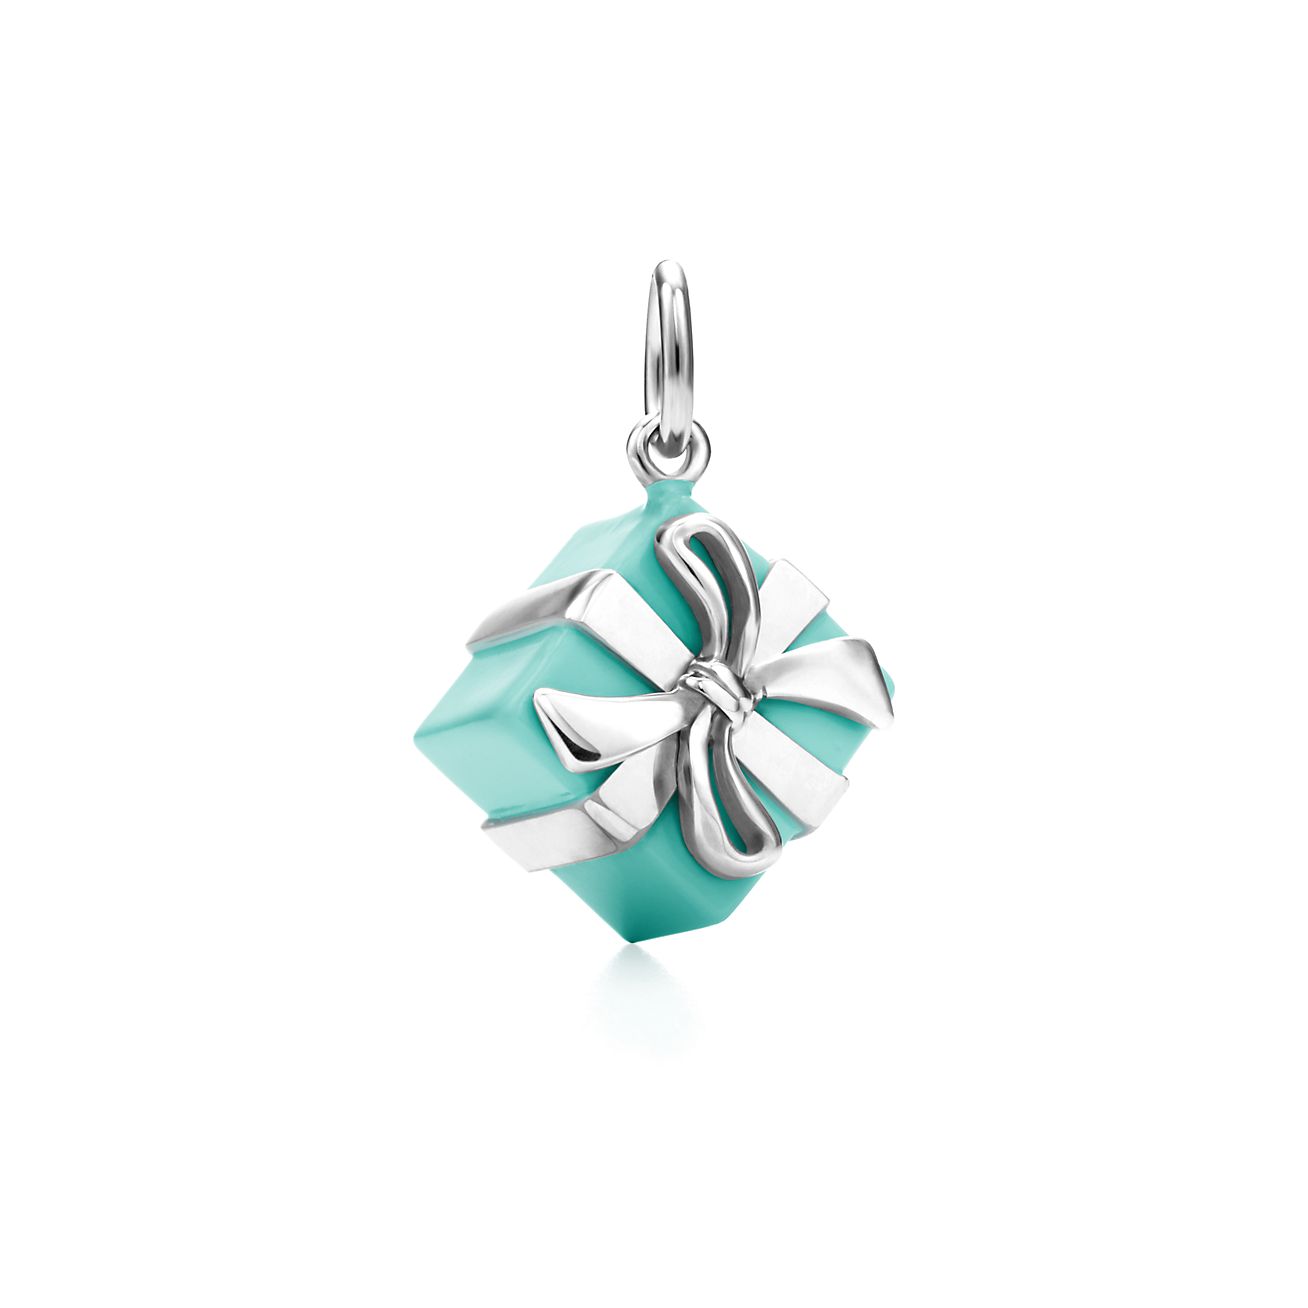 Tiffany & Co. Tiffany Blue® Clasping Bag Charm Bracelet - Sterling